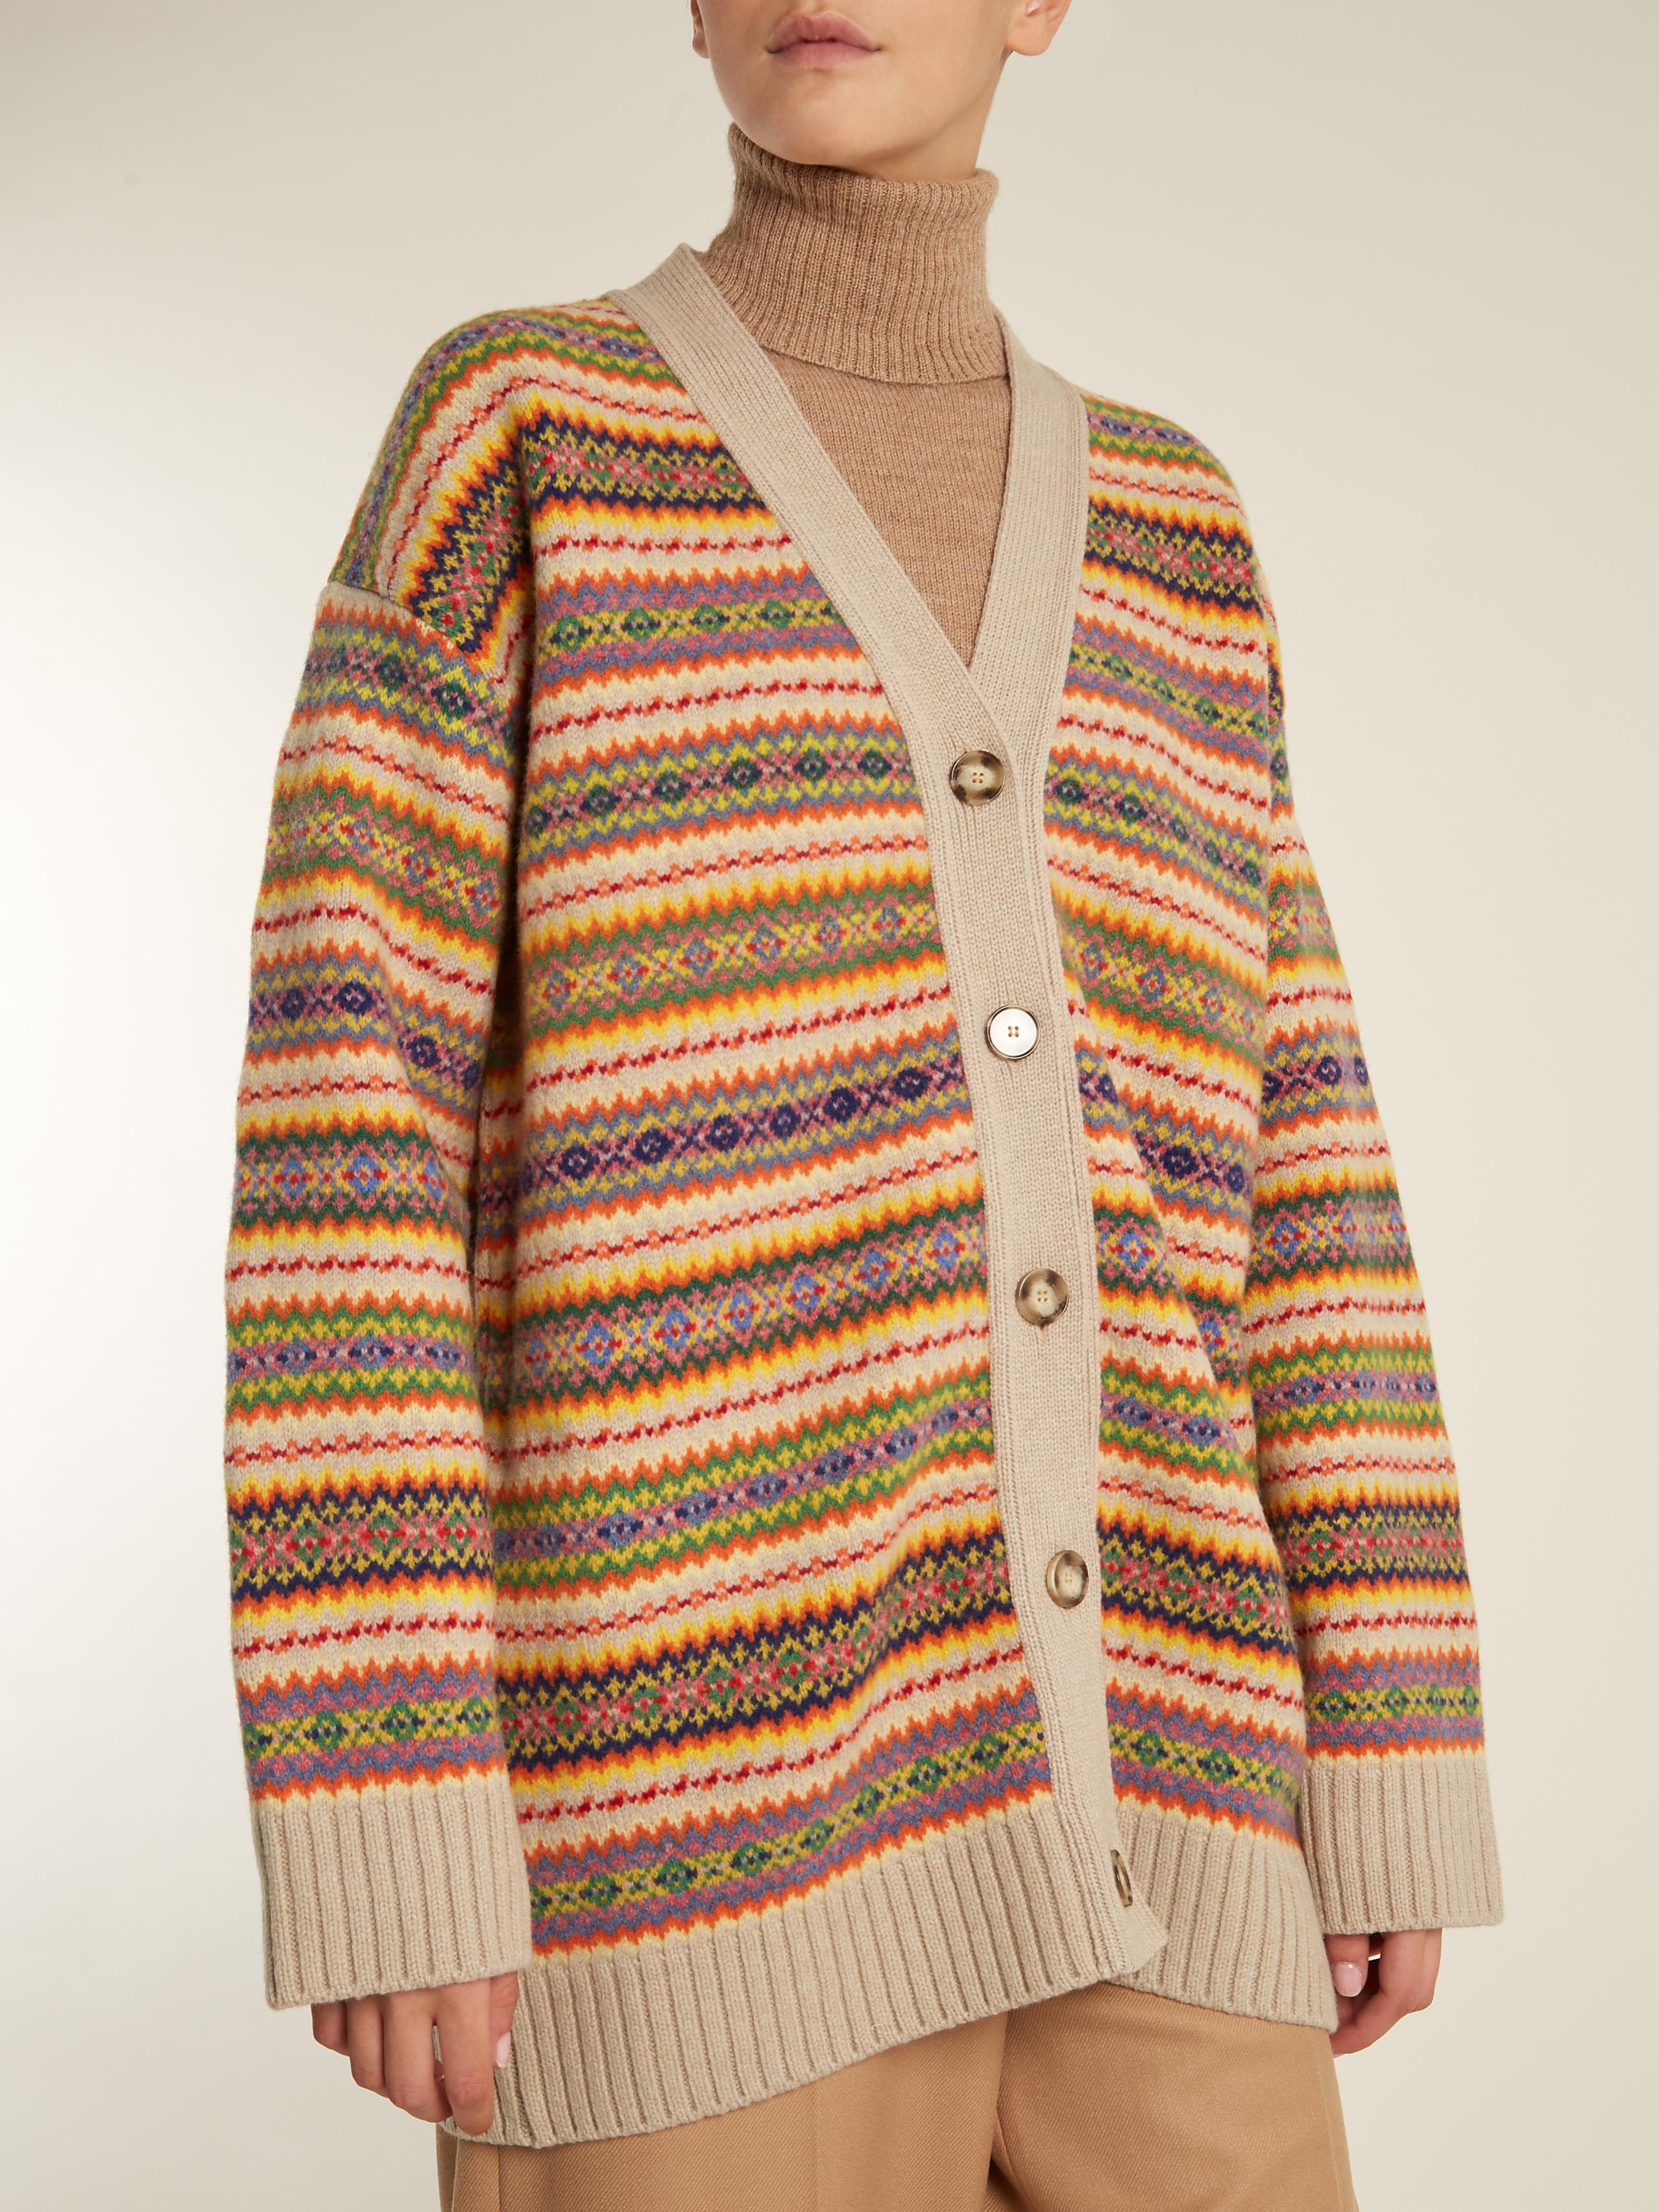 Stella McCartney Fair Isle Oversized V-neck Knit Cardigan in Natural - Lyst